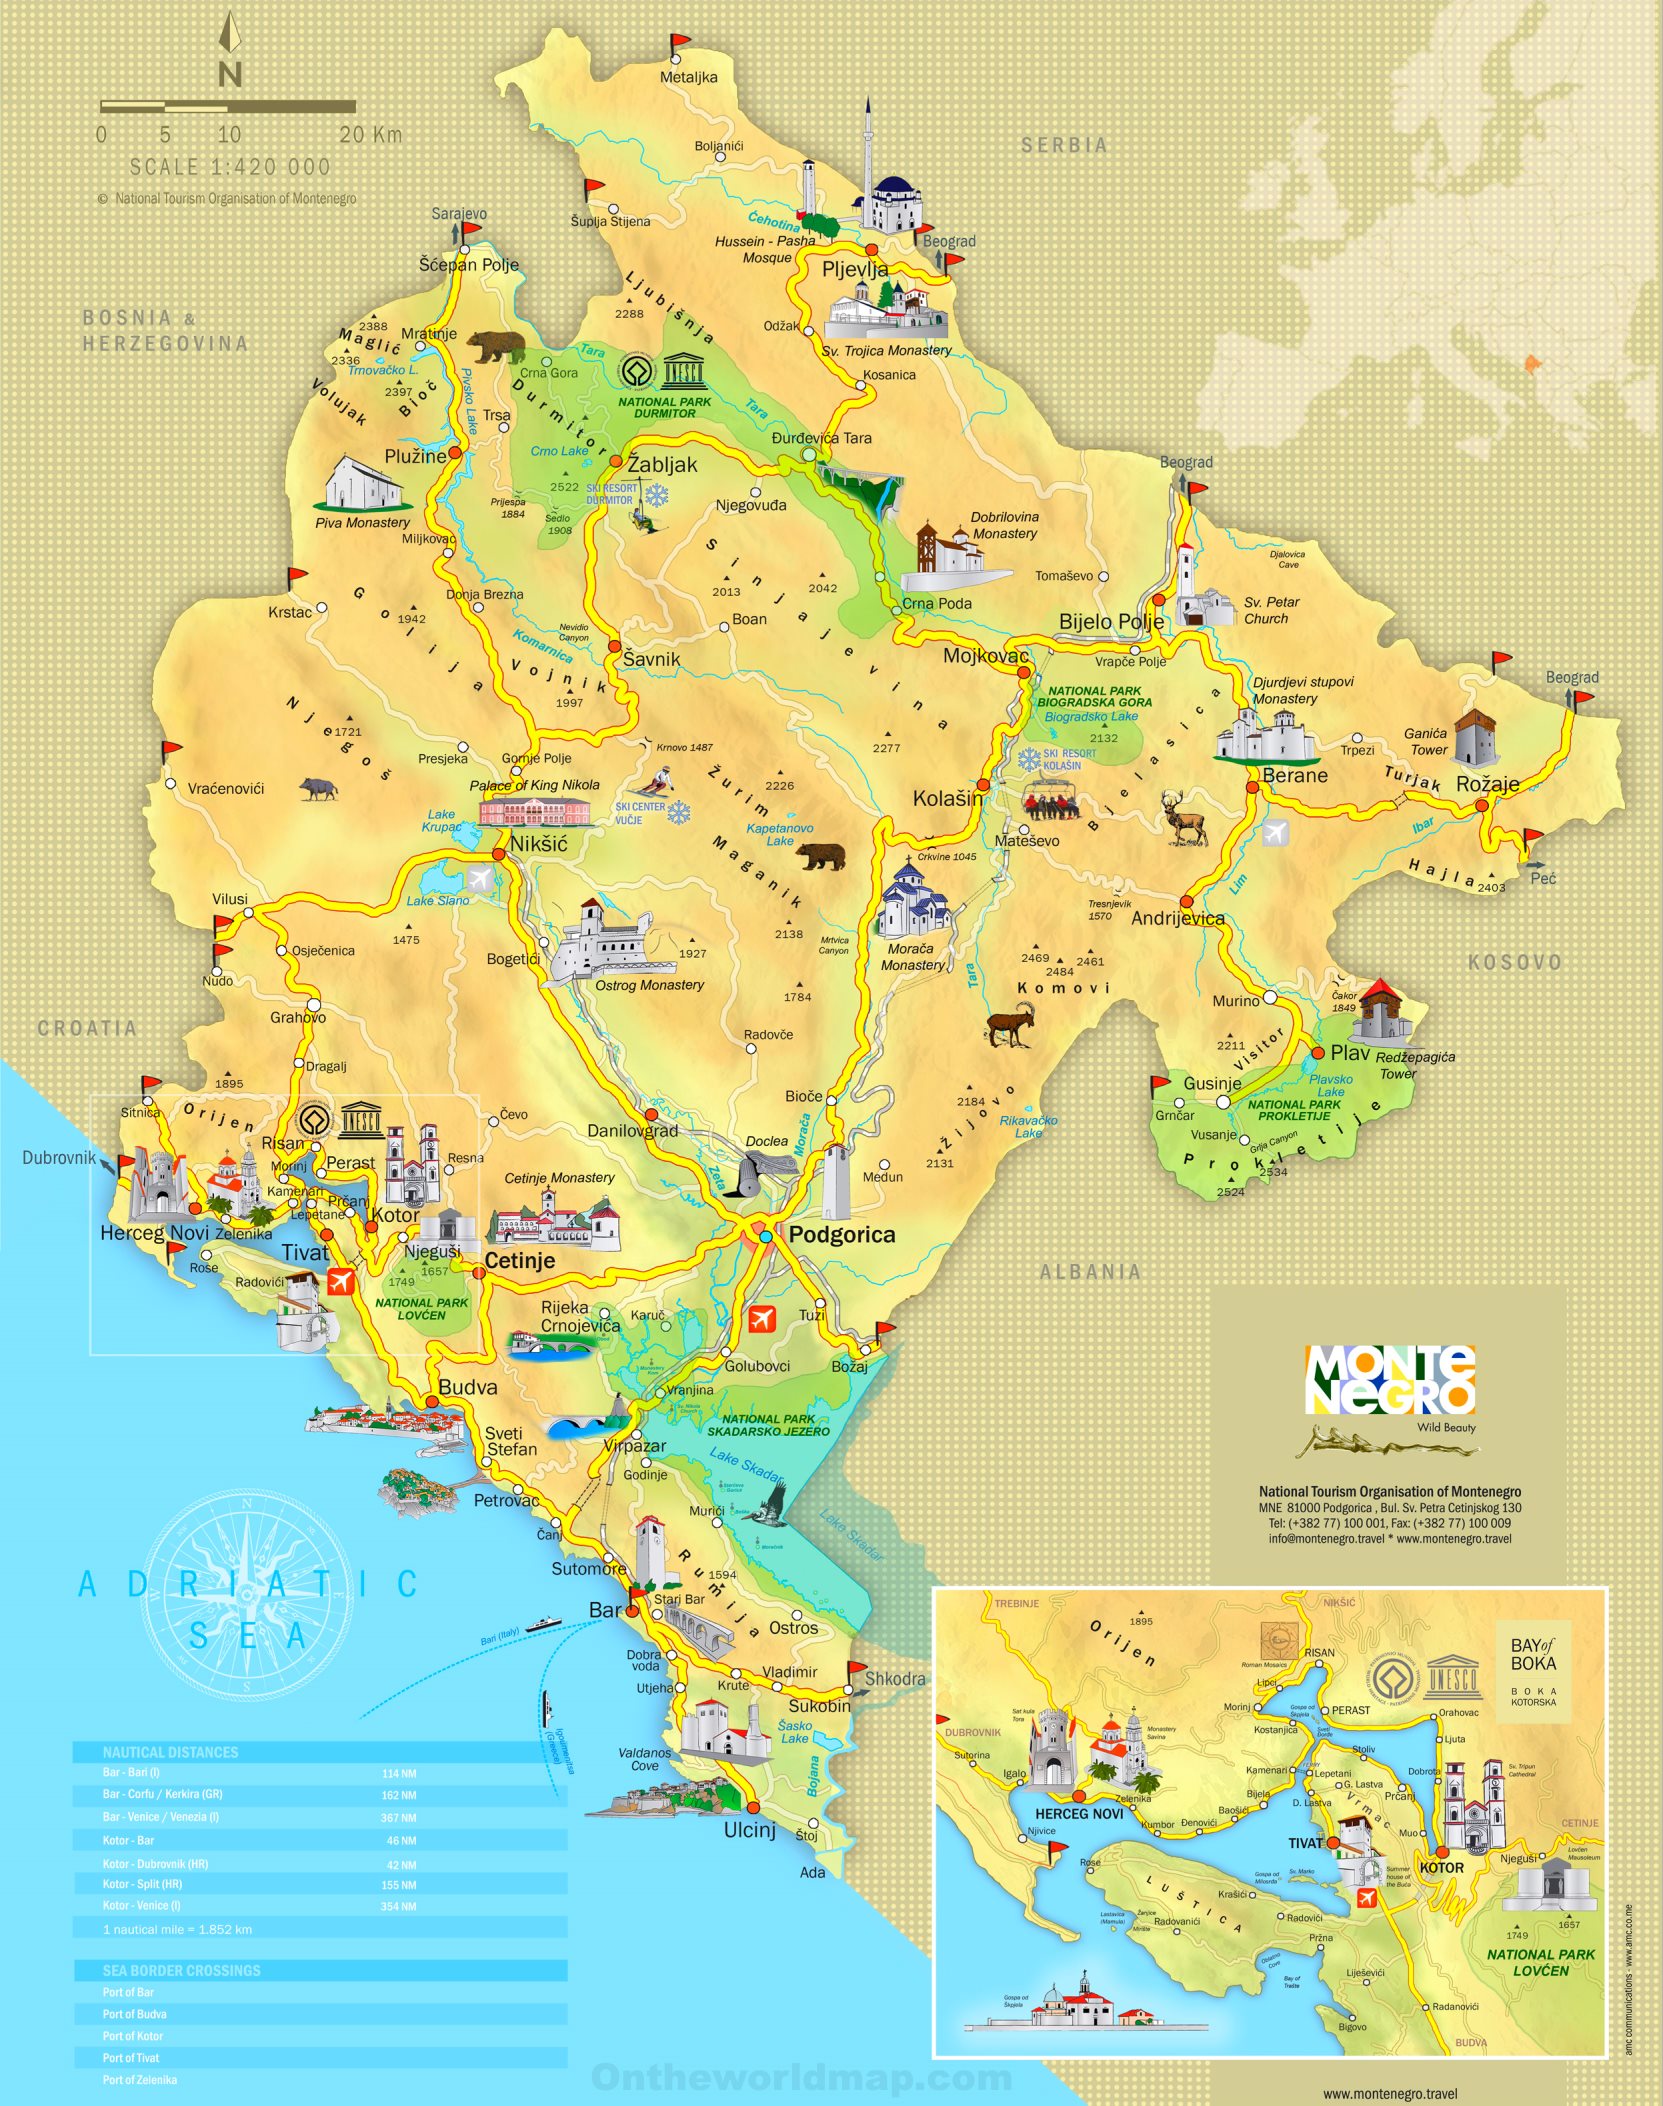 montenegro-tourist-attractions-map_nagy.jpg